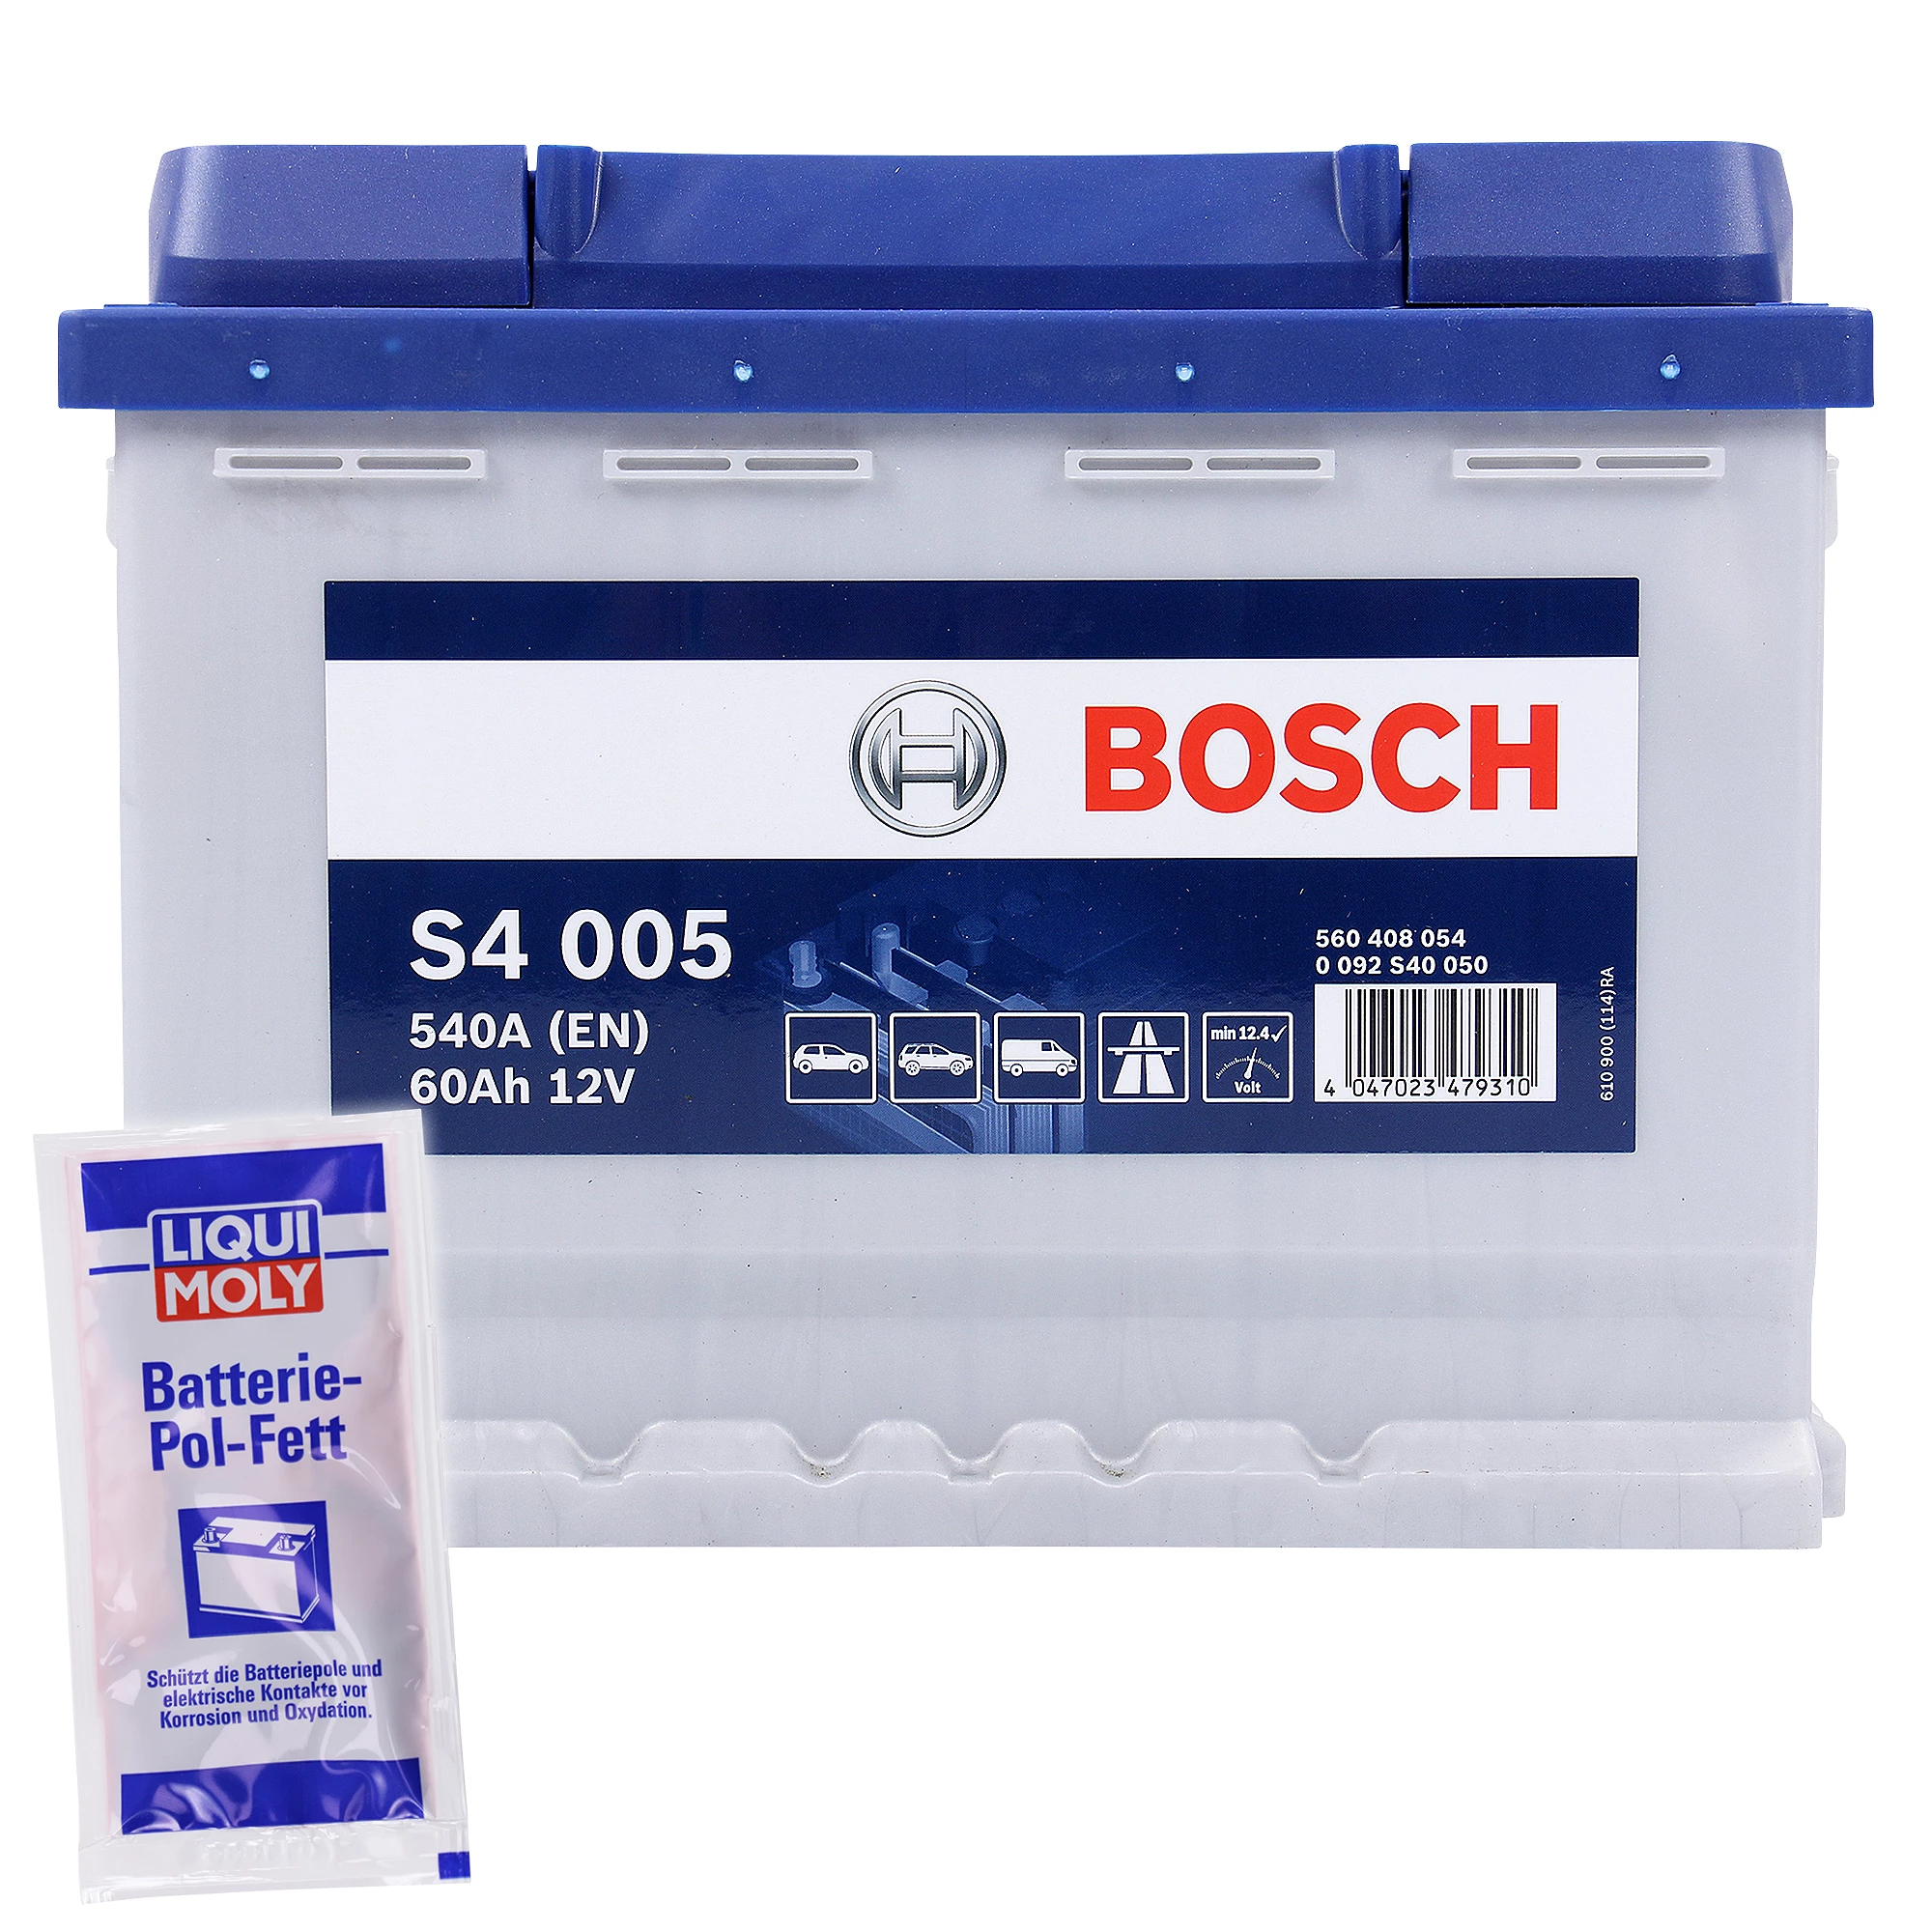 BOSCH Starterbatterie S4 005 60Ah 540A 12V + 10g Pol-Fett 0092S40050  günstig online kaufen